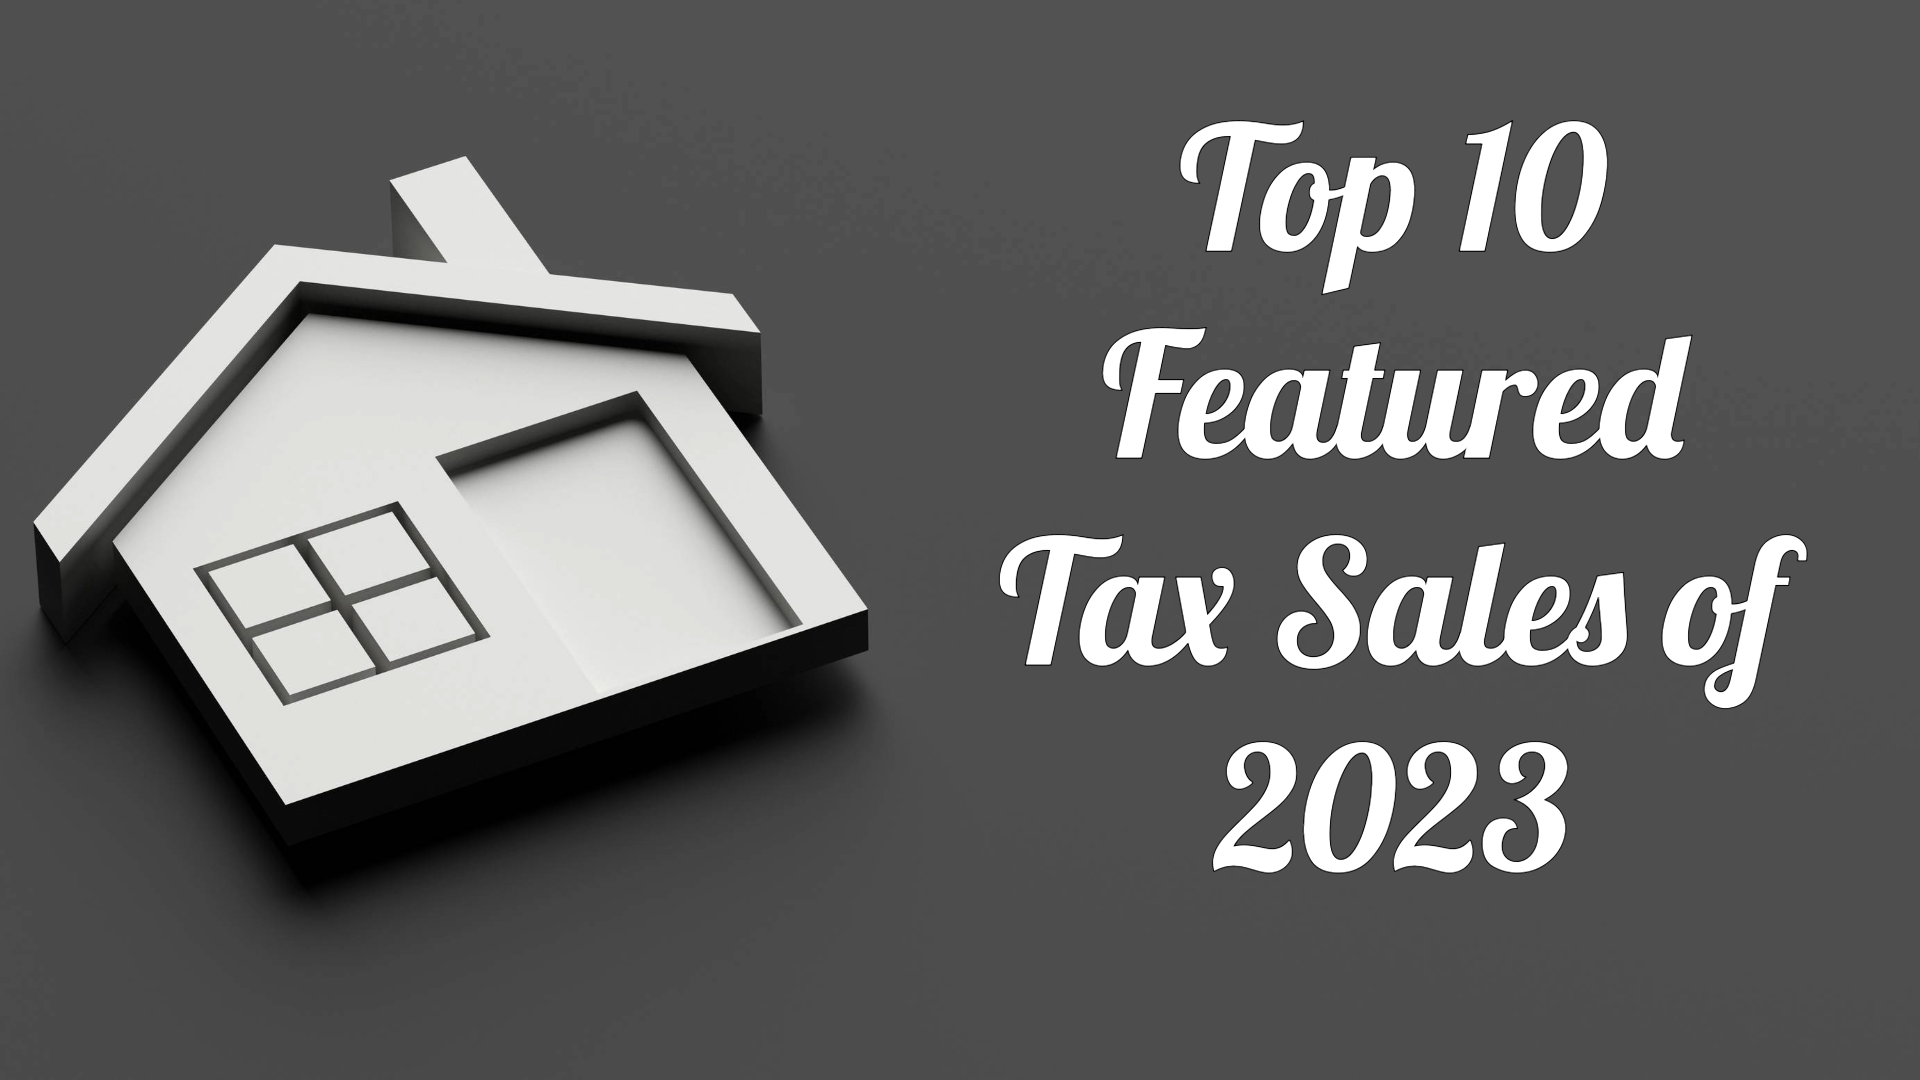 Top102023d | property photo | ontario tax sales